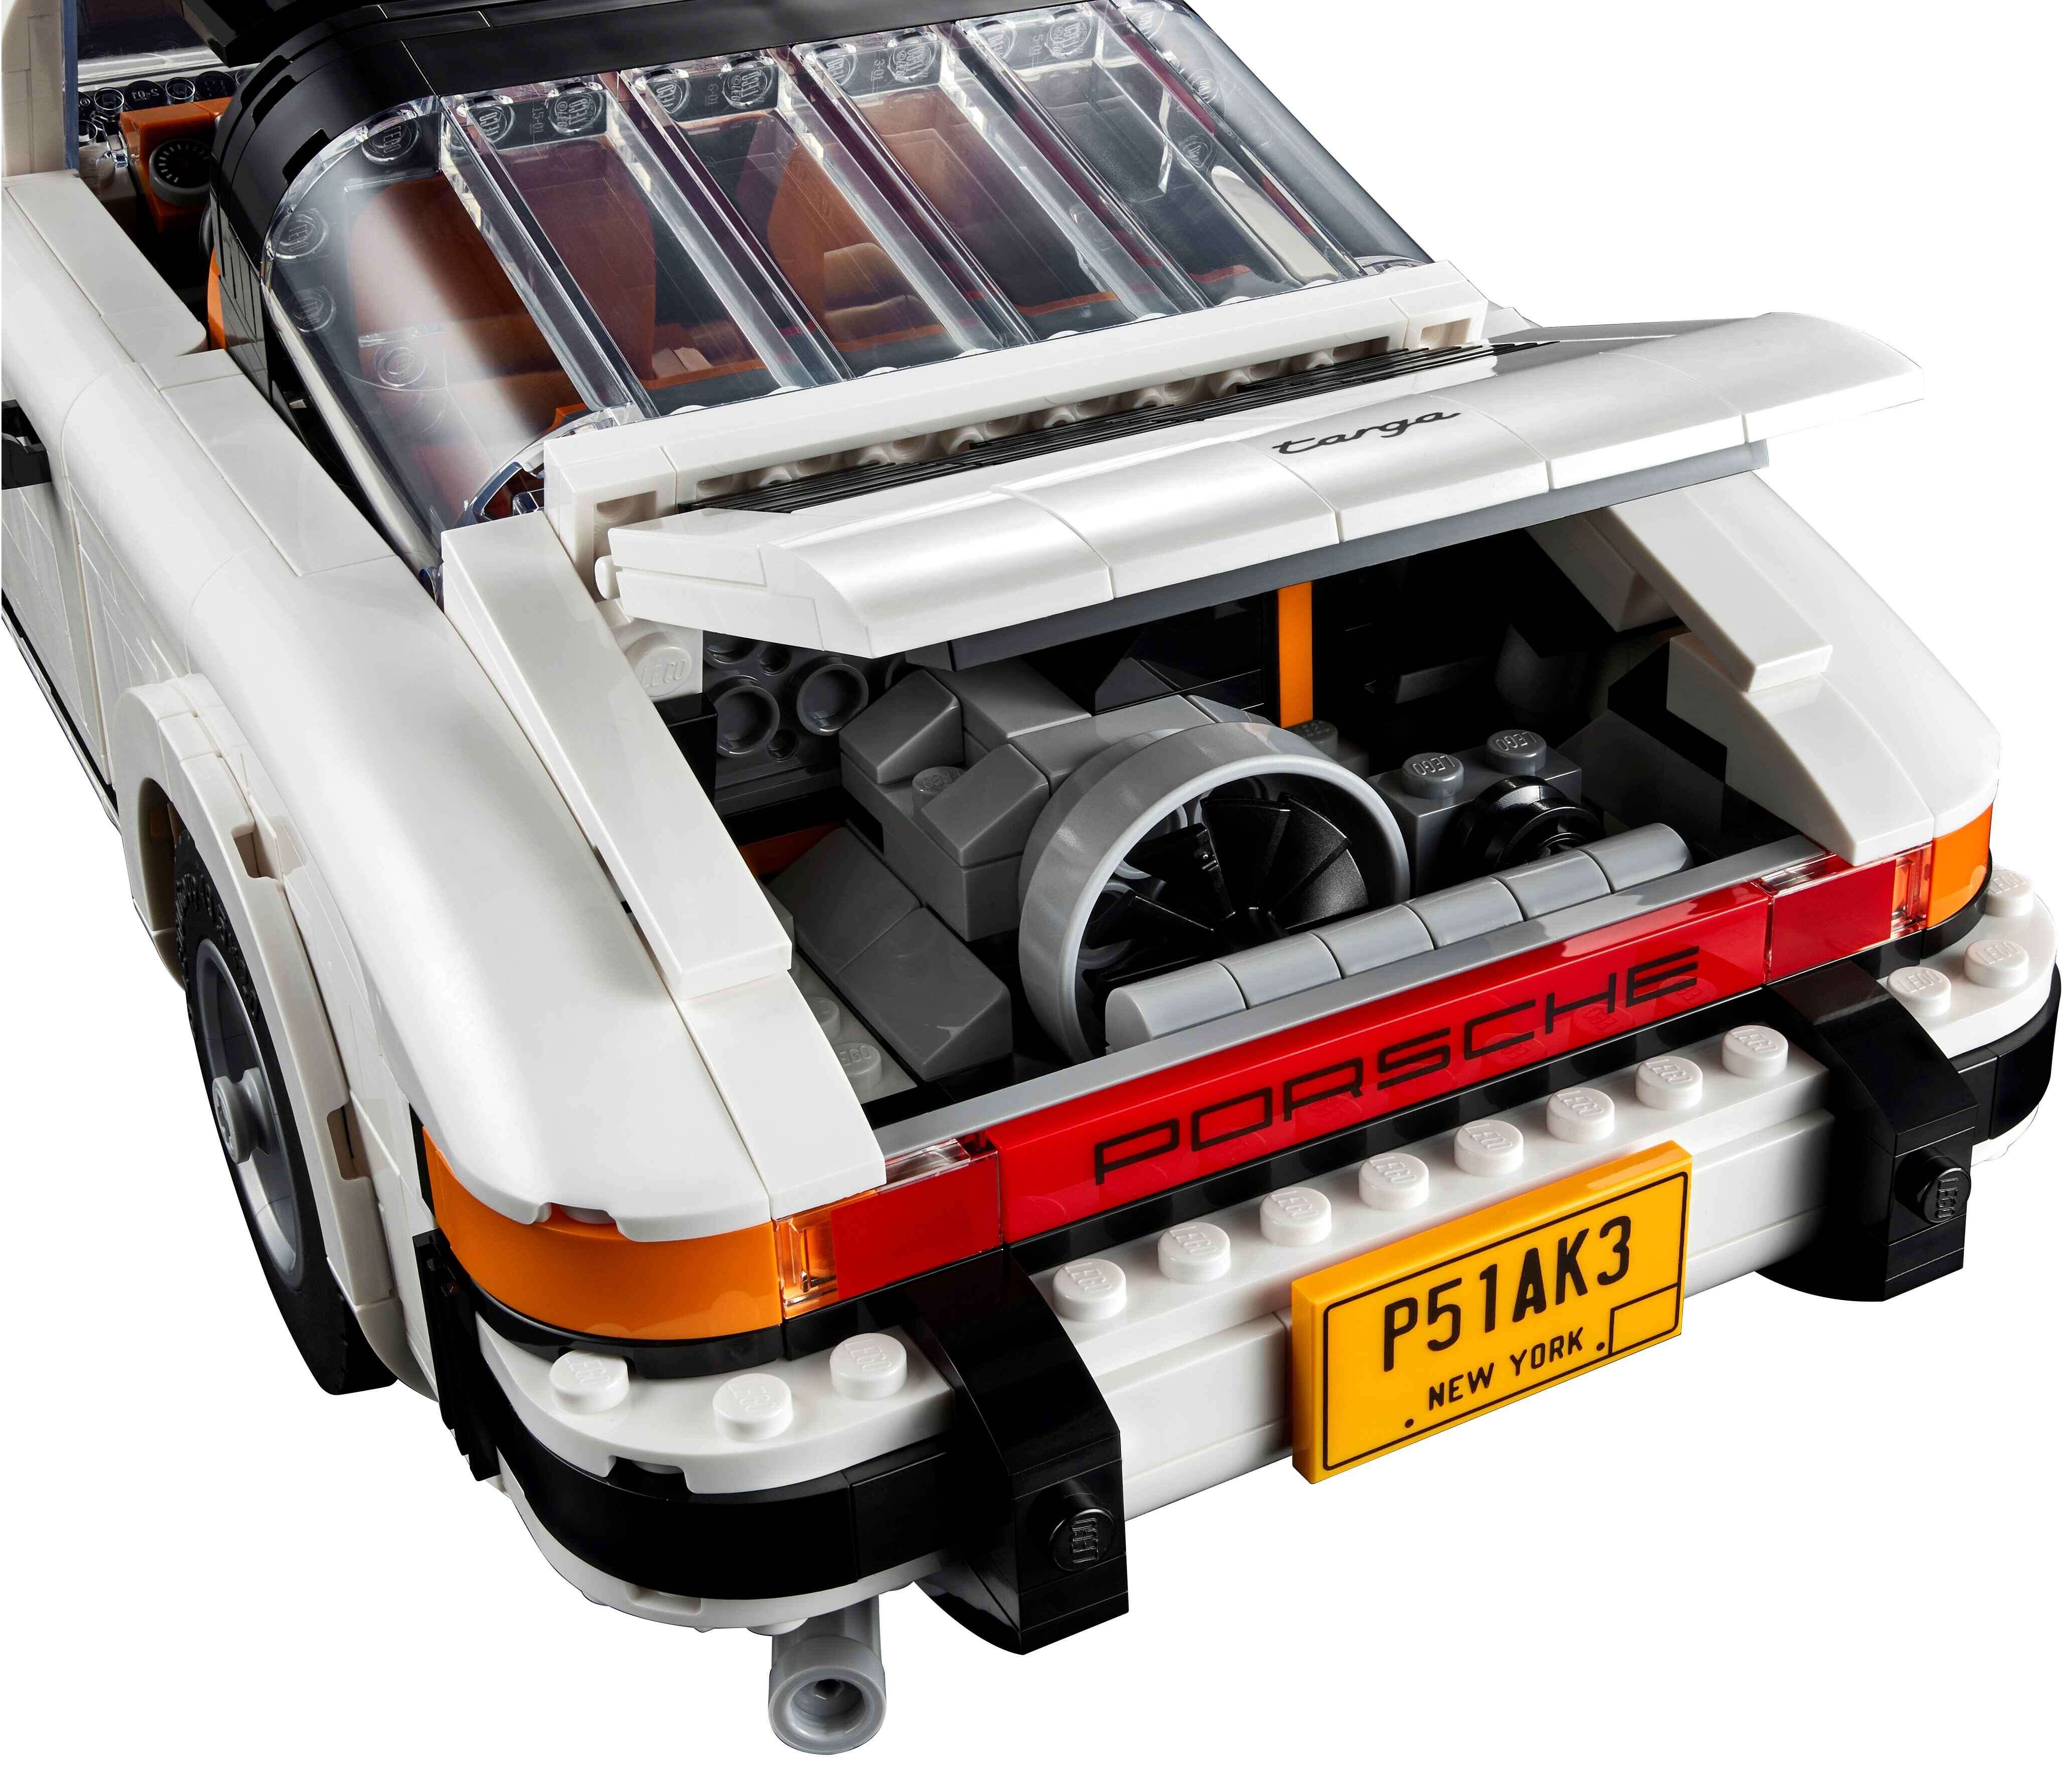 LEGO 10295 Icons Porsche 911, Turbo Targa 2in1, Modellauto, Sammlerstück